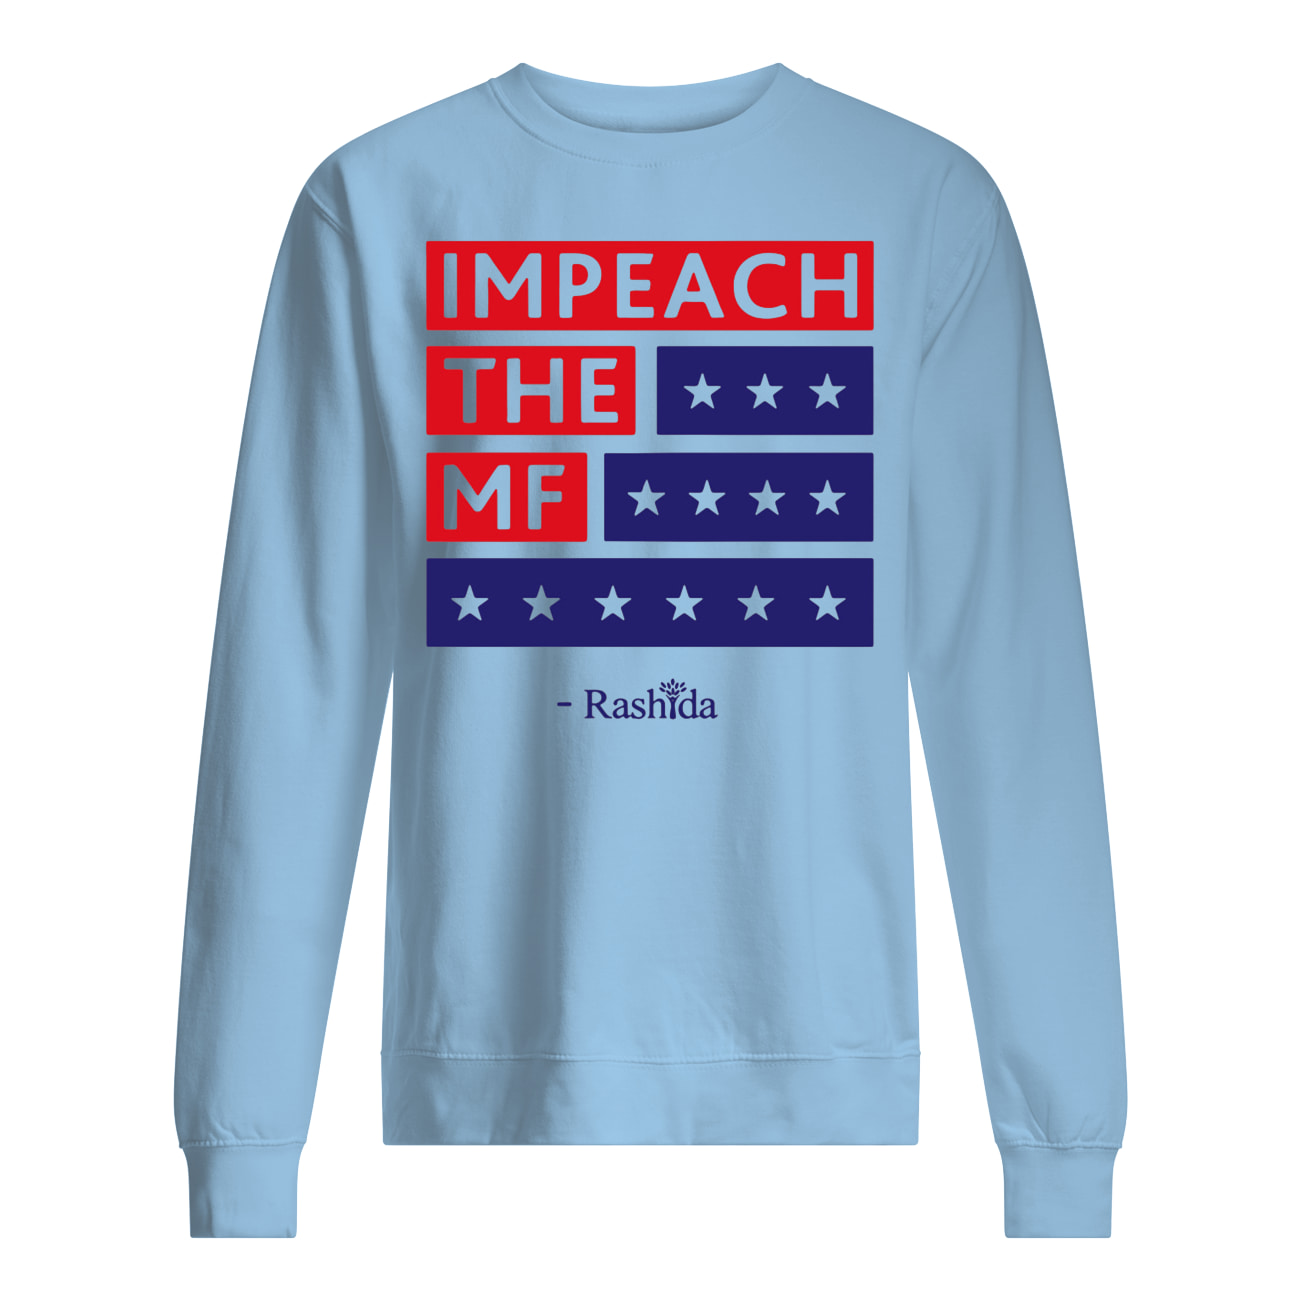 Rashida impeach the mf sweatshirt